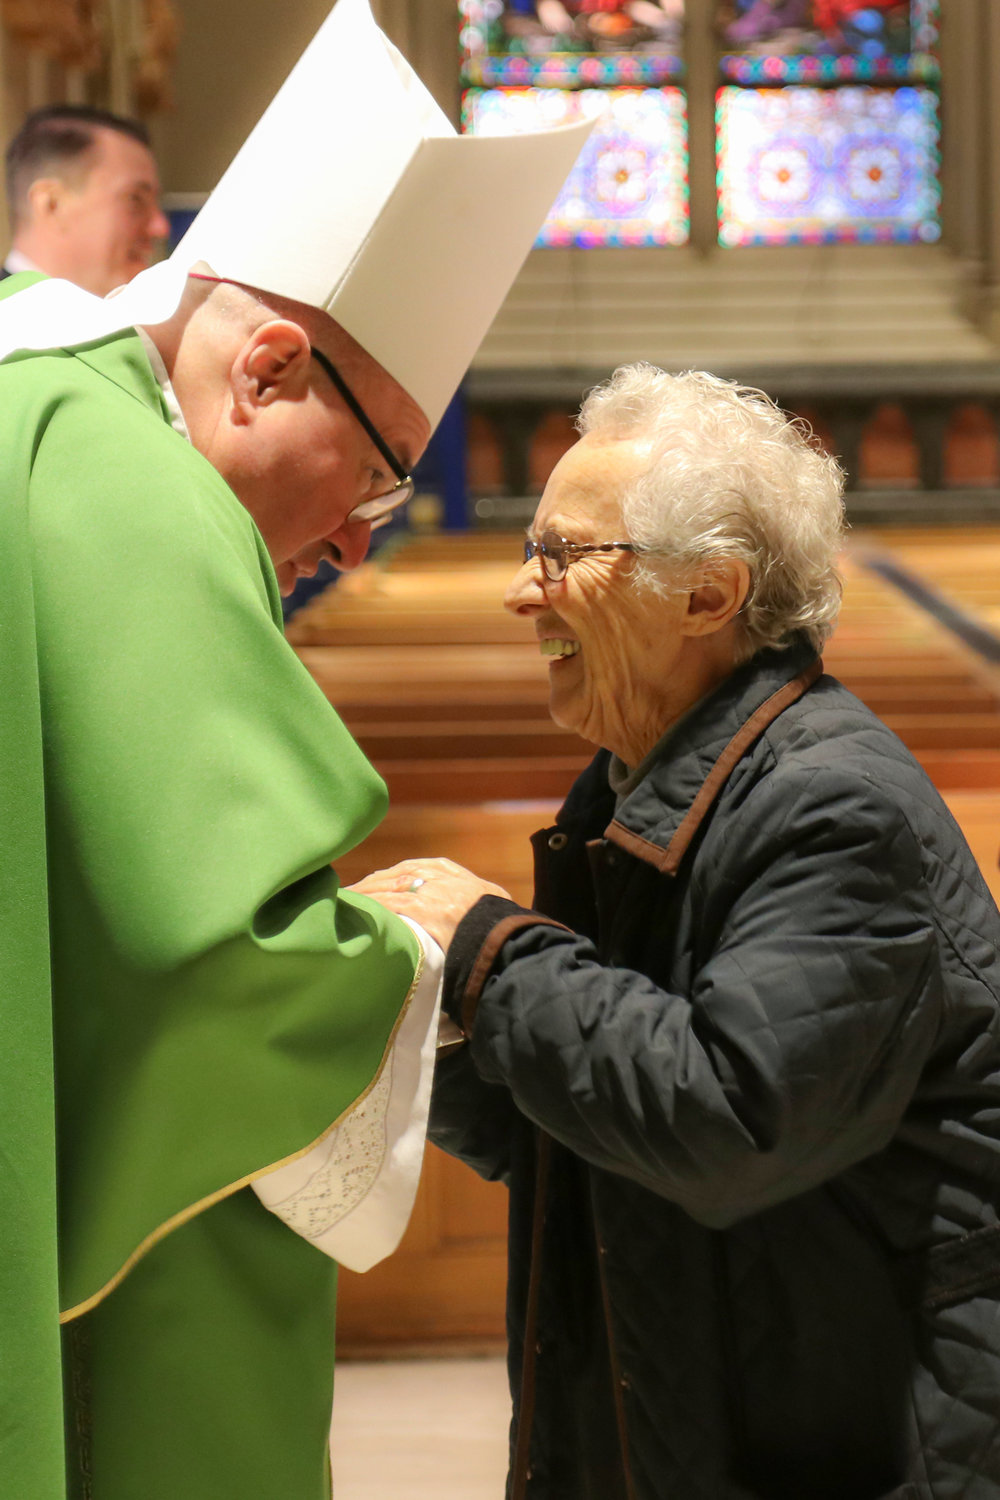 The new Coadjutor Bishop greeted faithful following Mass.